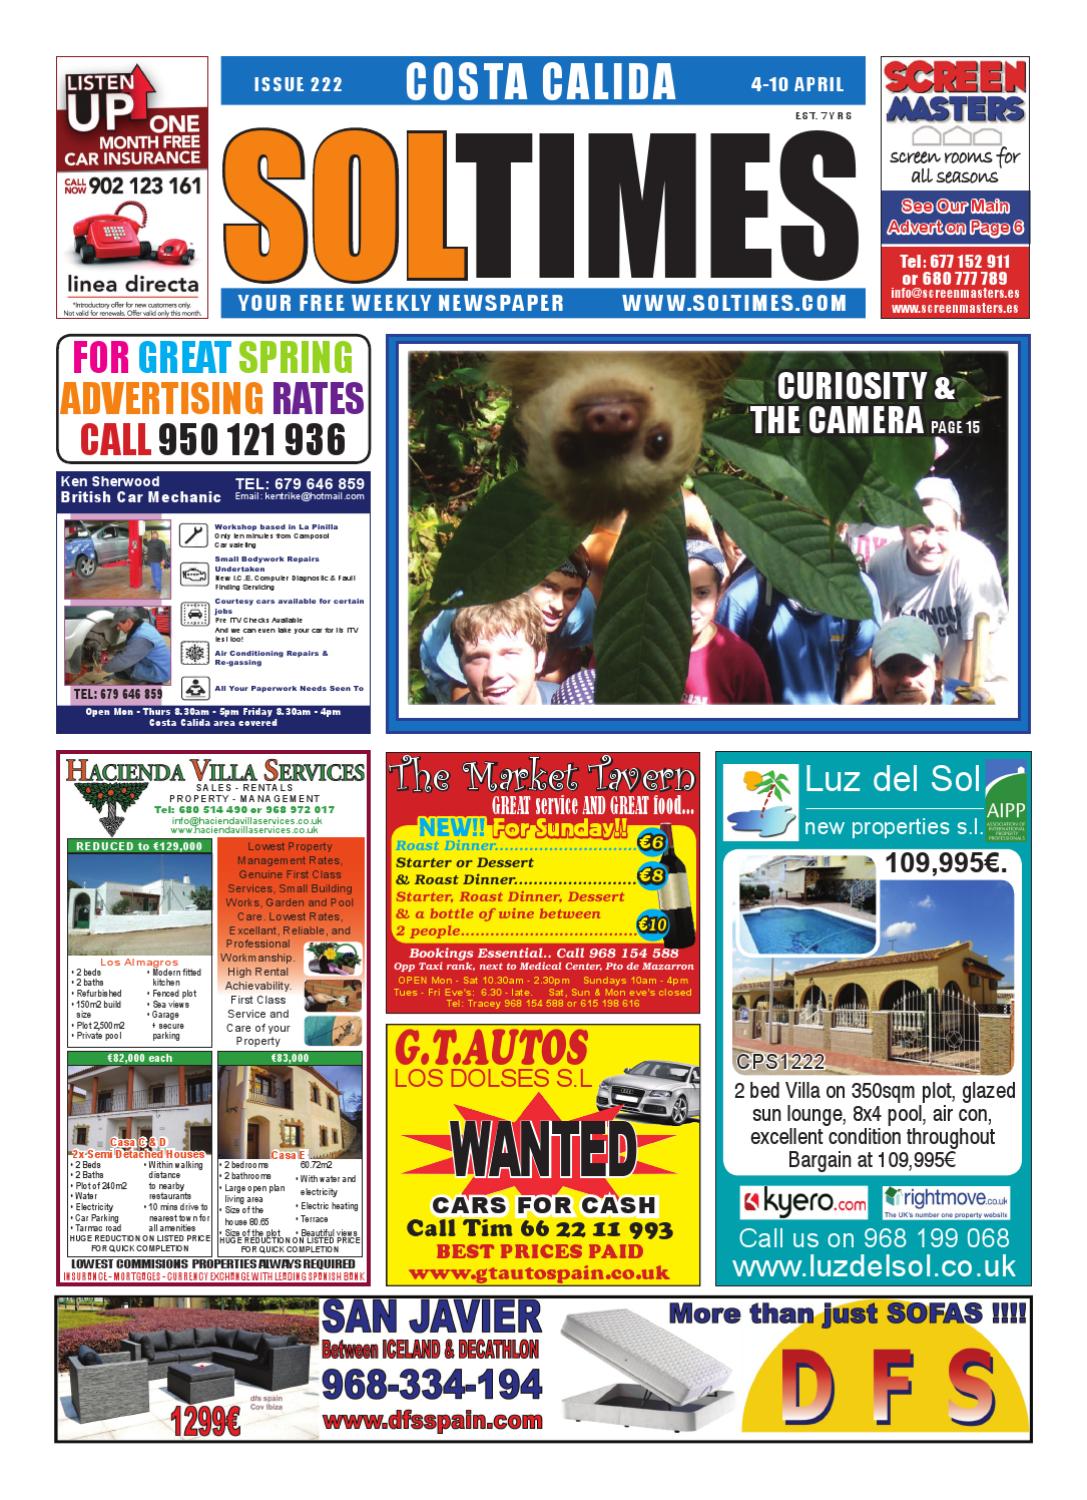 Salon De Jardin Lidl Génial sol Times Newspaper issue 222 Costa Calida Edition by Nigel